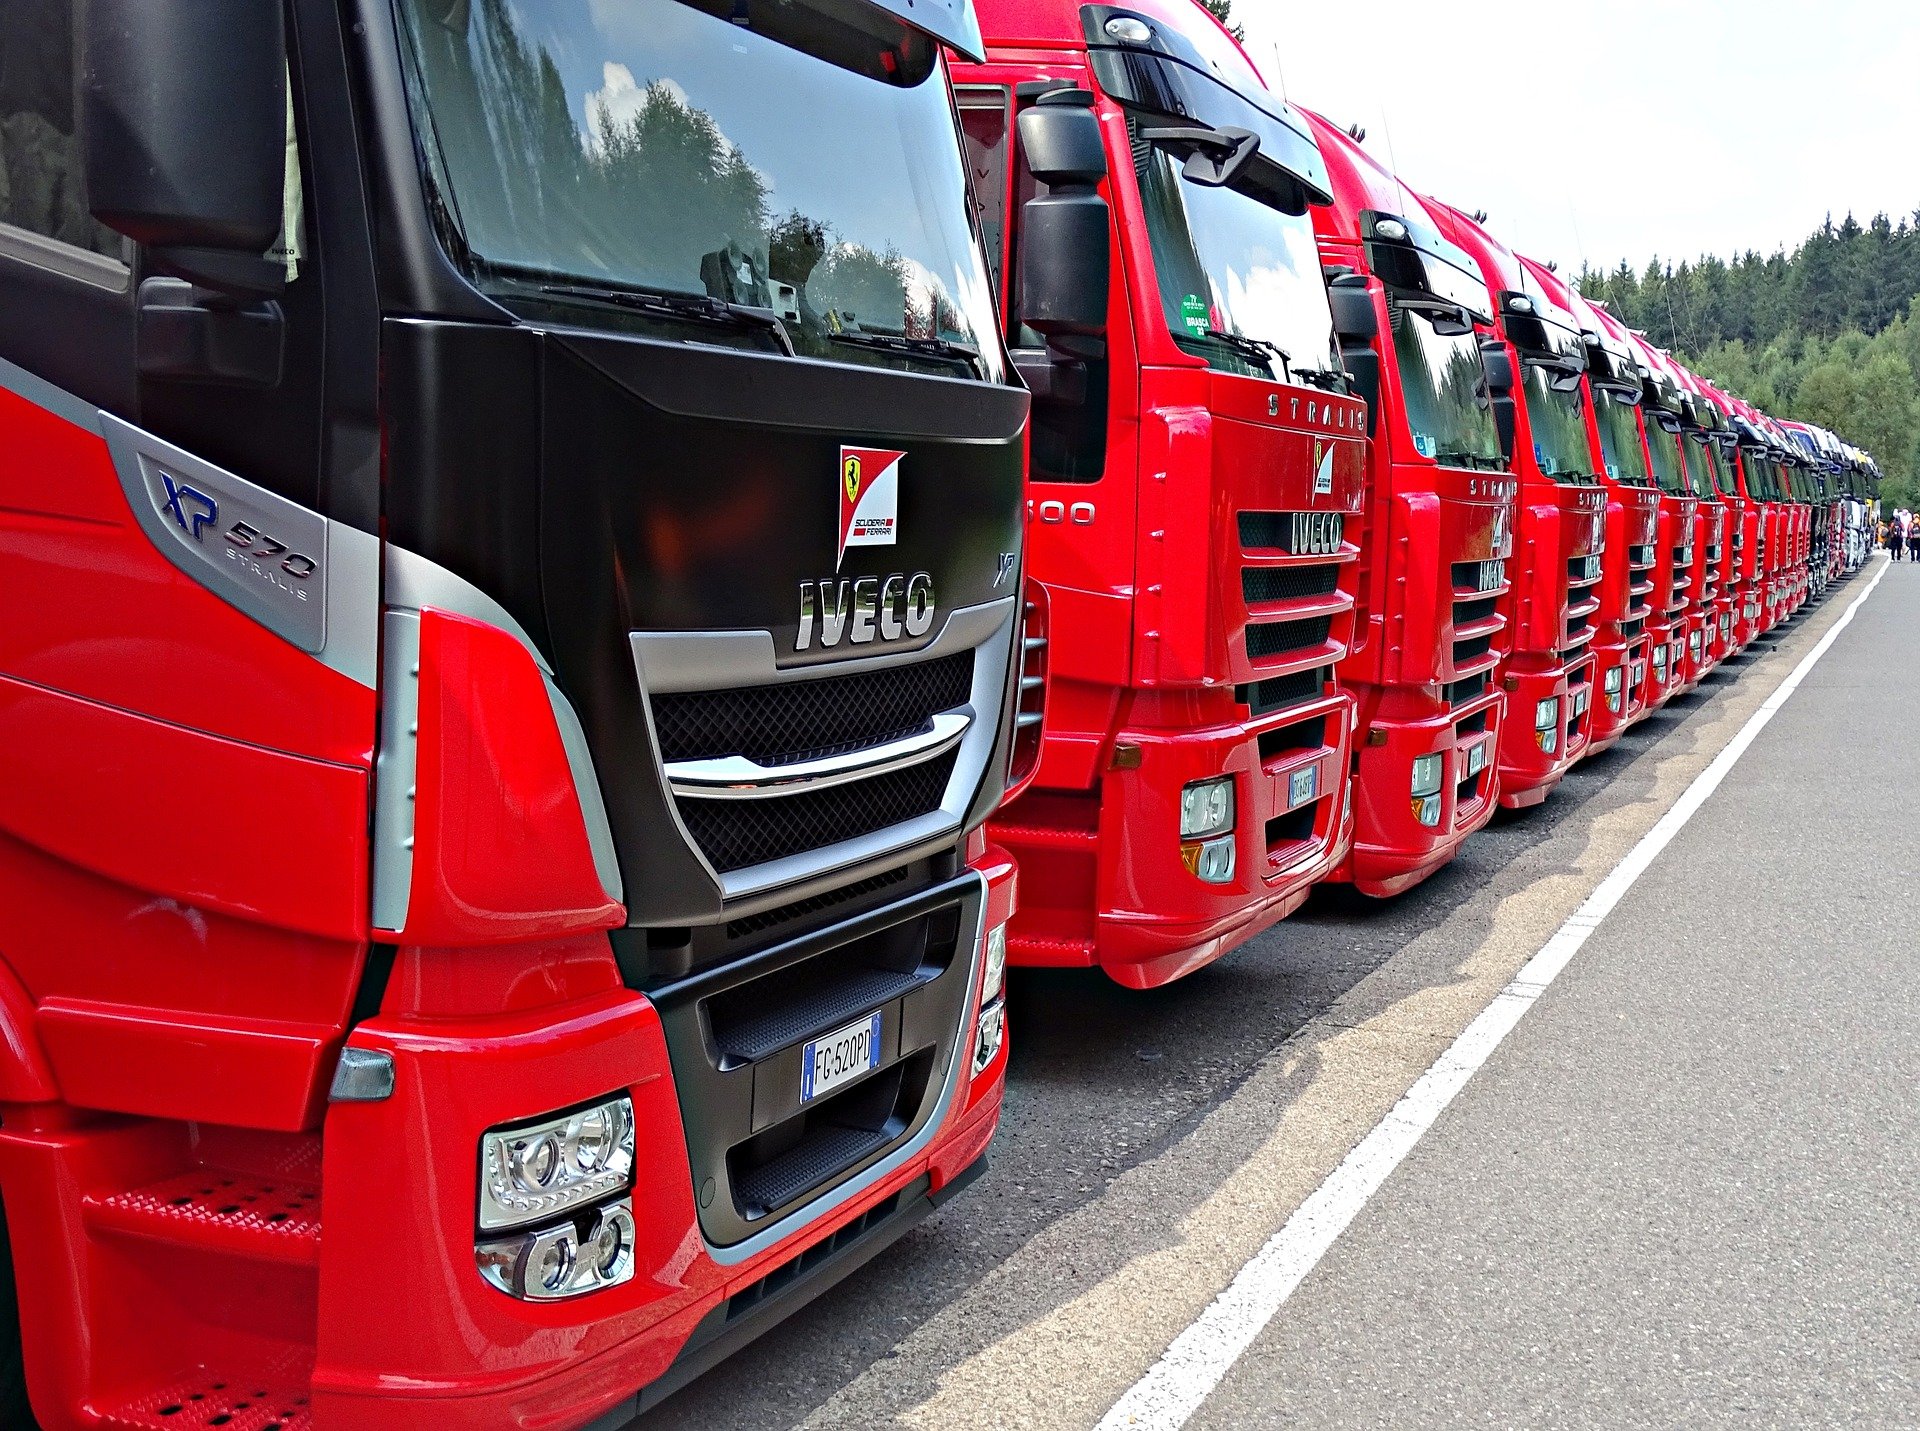 Primaver dispose de 3000 camions en France Illustration Image par GREGOR de Pixabay